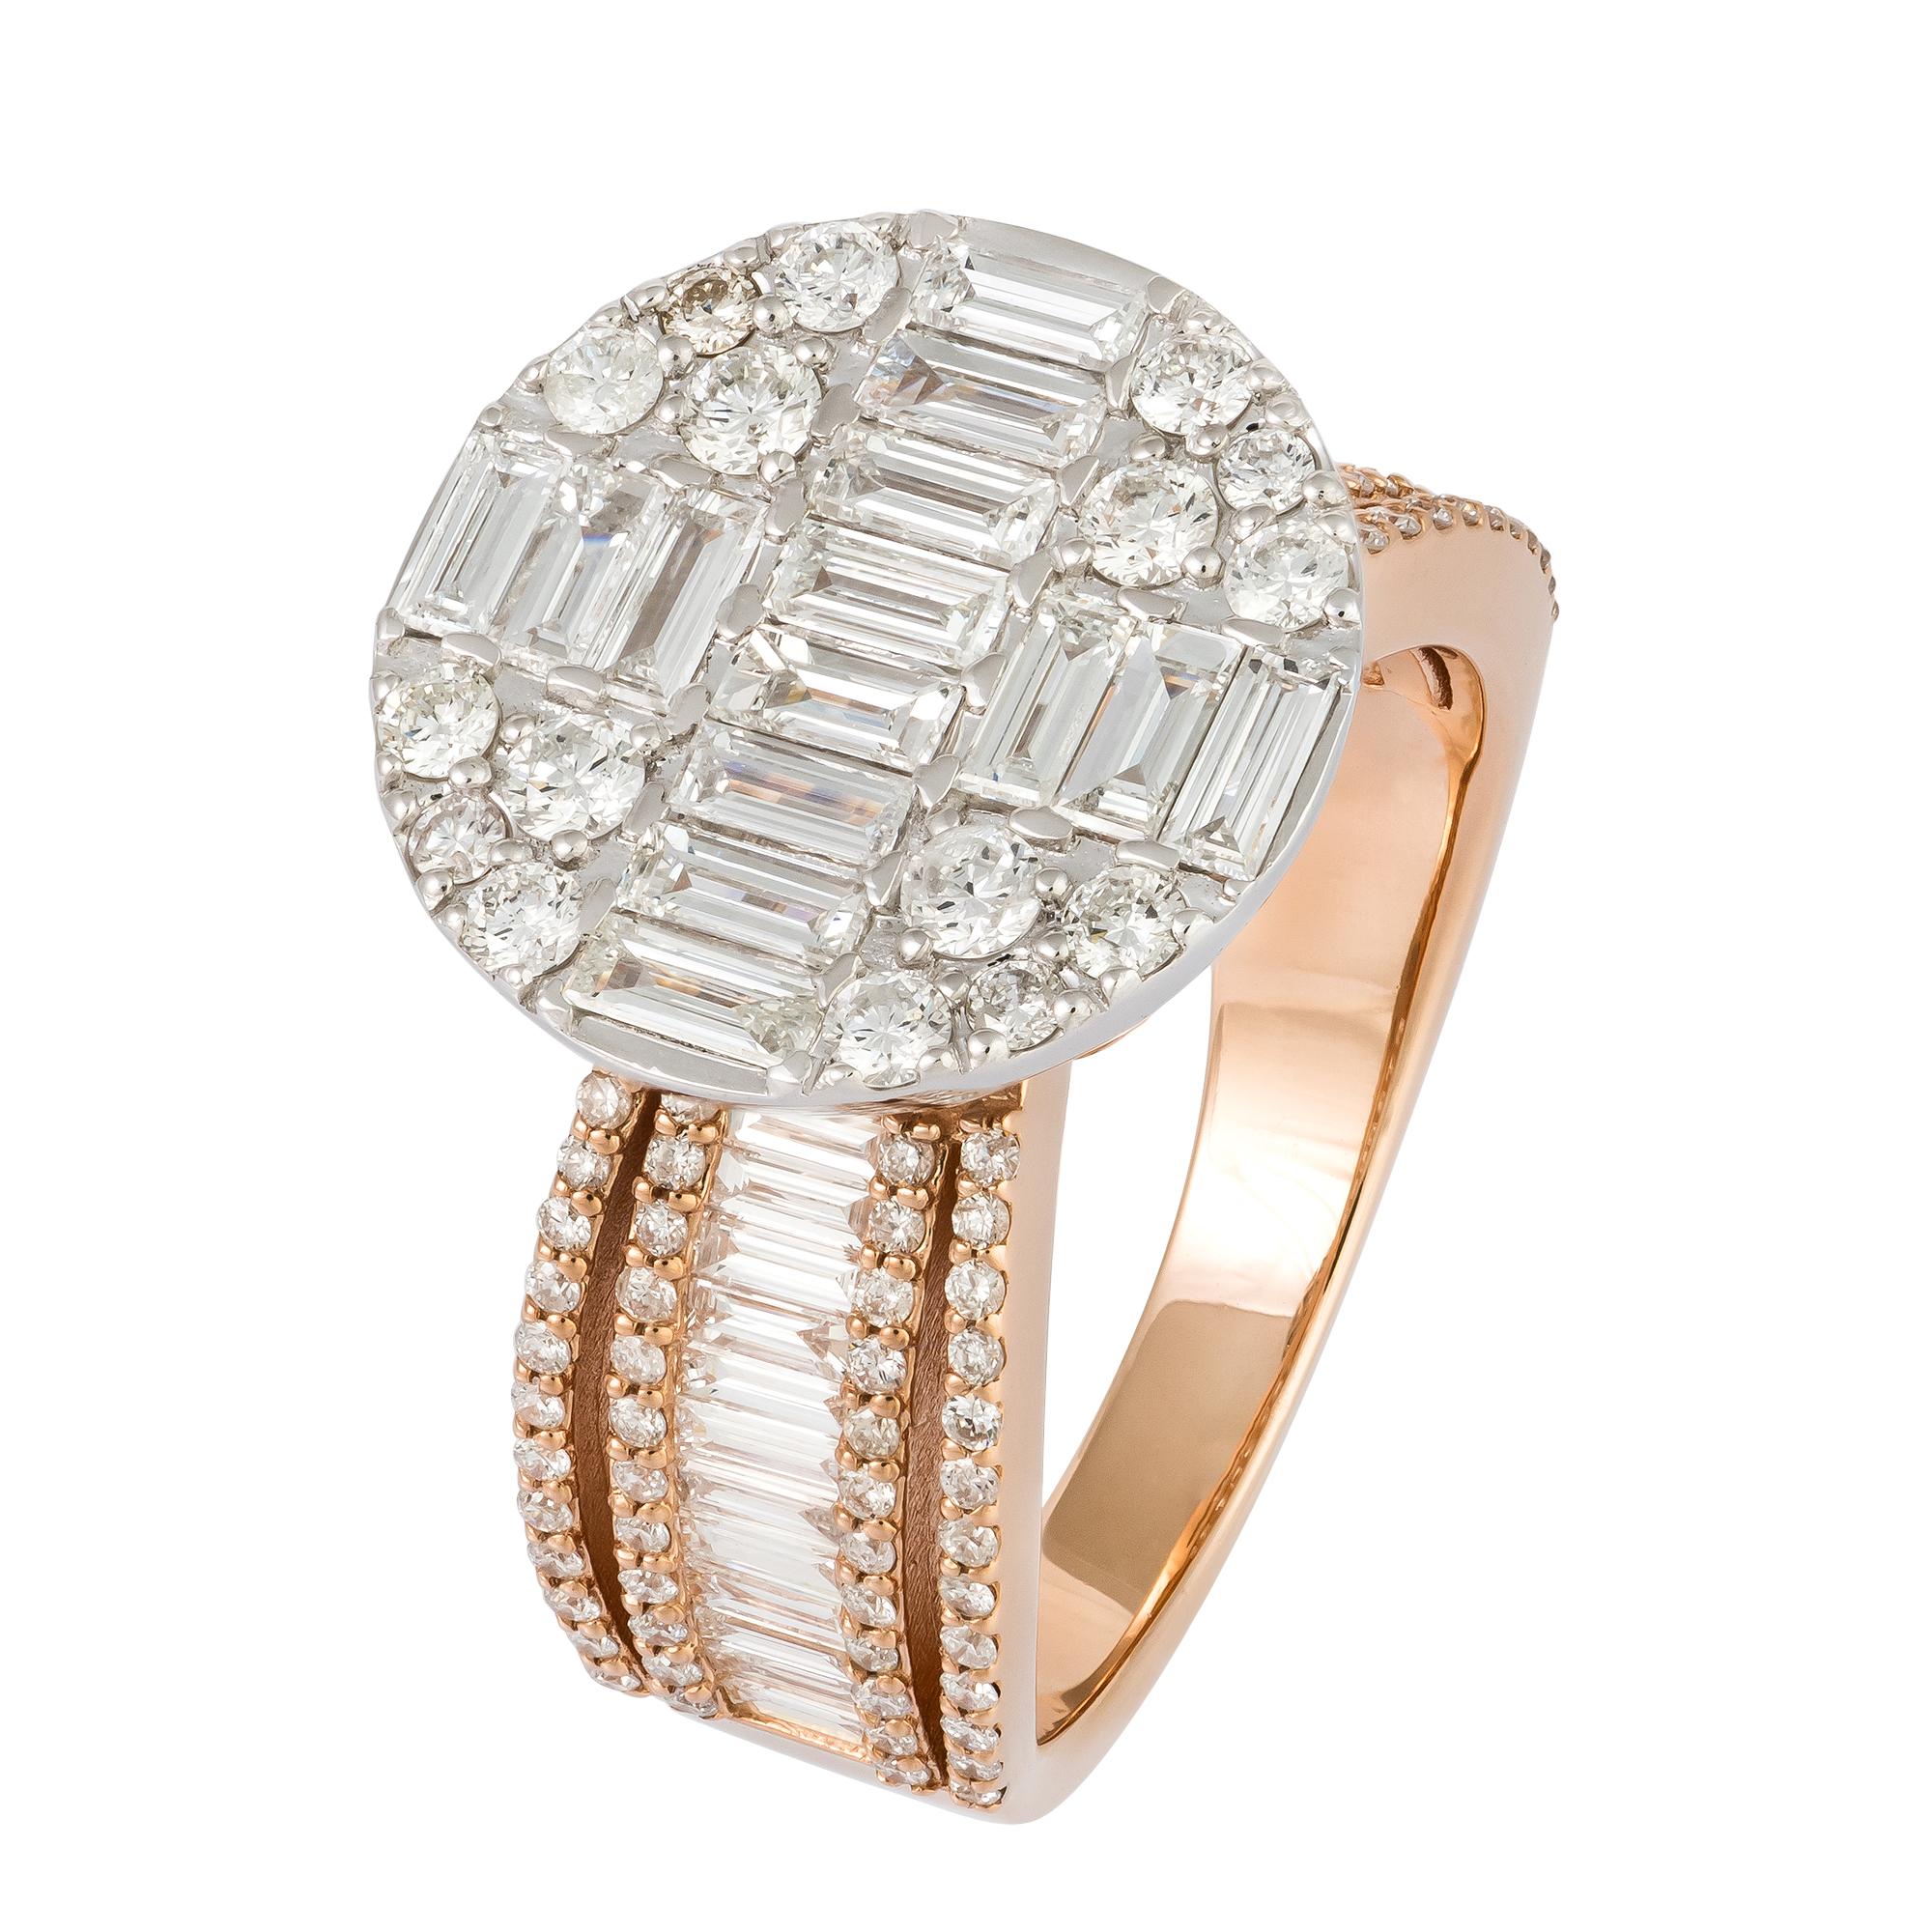 For Sale:  Breathtaking  White Pink 18K Gold White Diamond Ring For Her 3